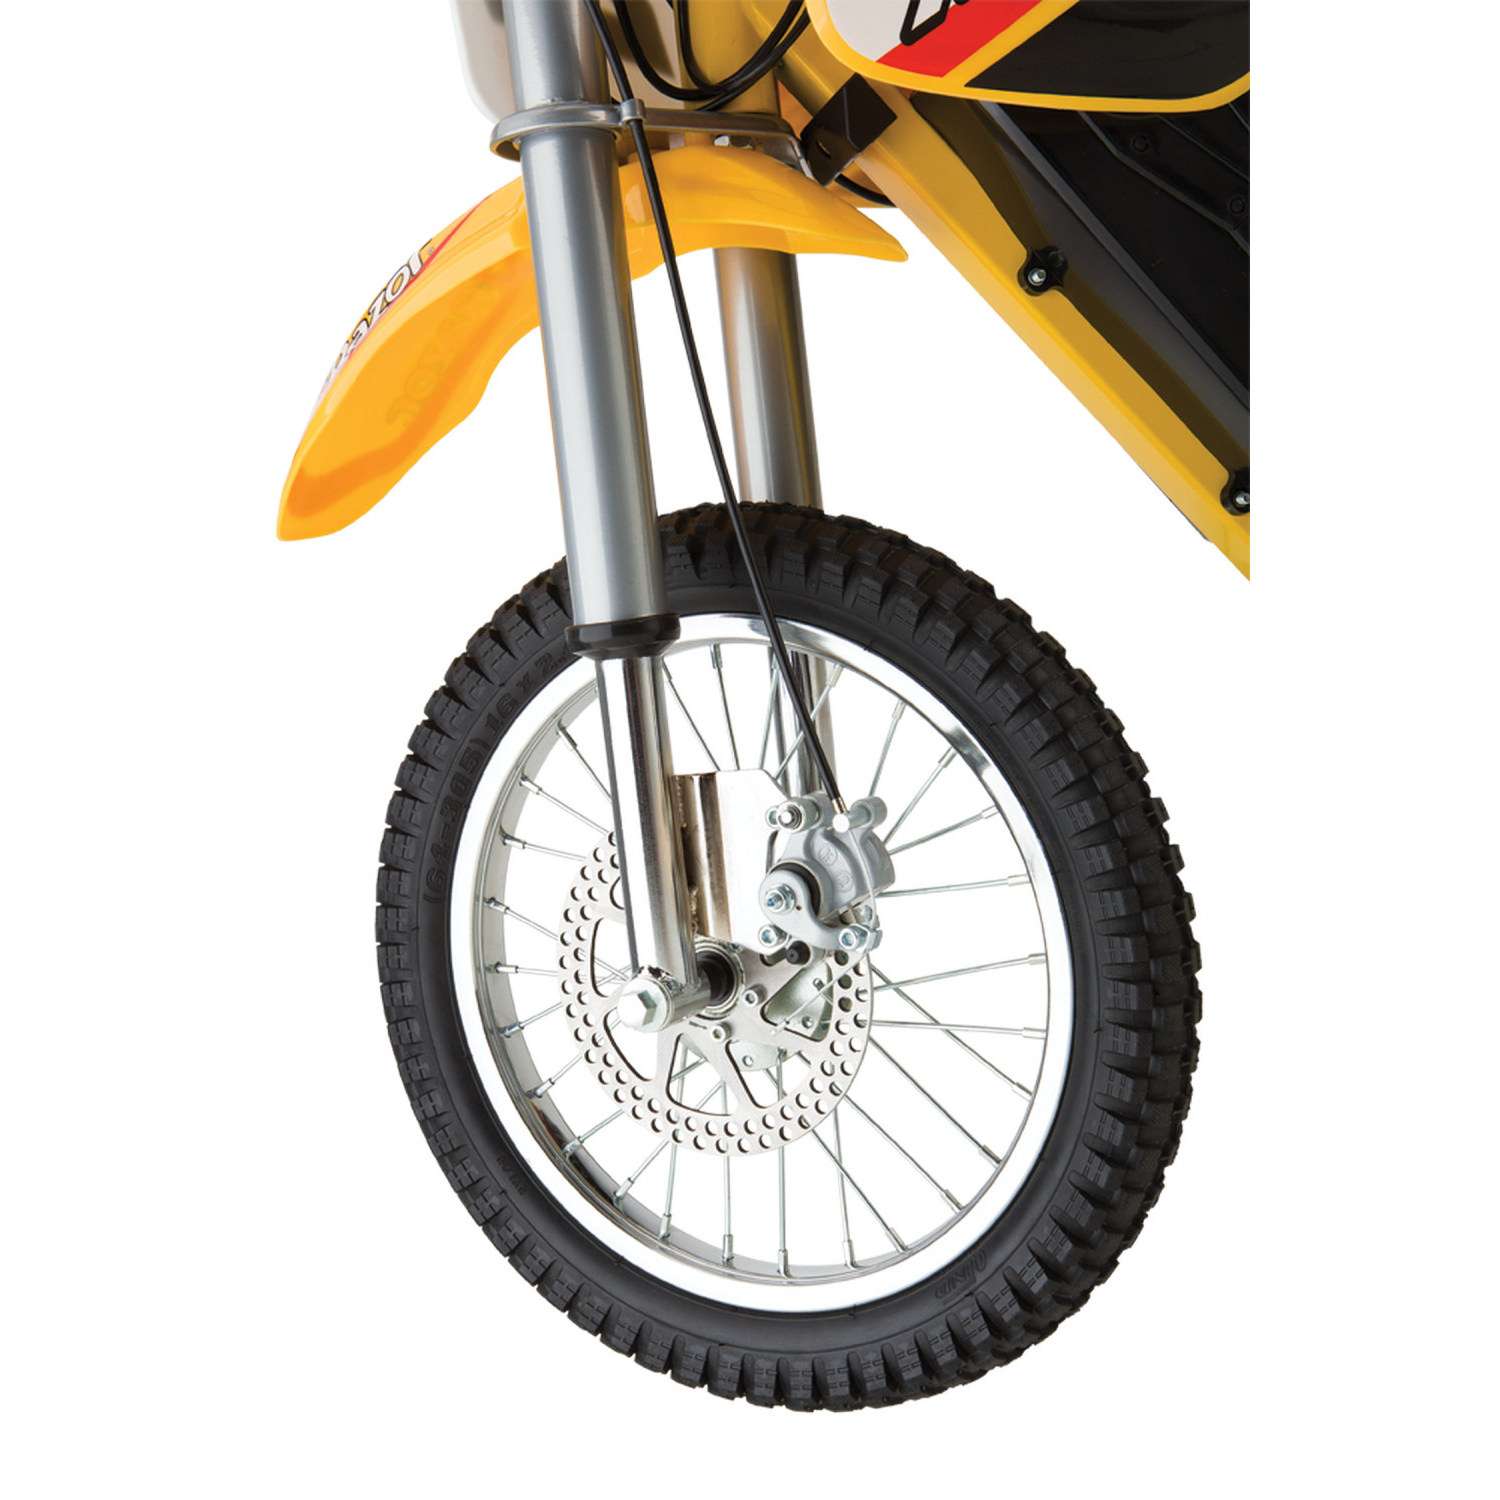 Электромотоцикл для детей RAZOR MX650 жёлтый с амортизаторами для бездорожья - фото 6